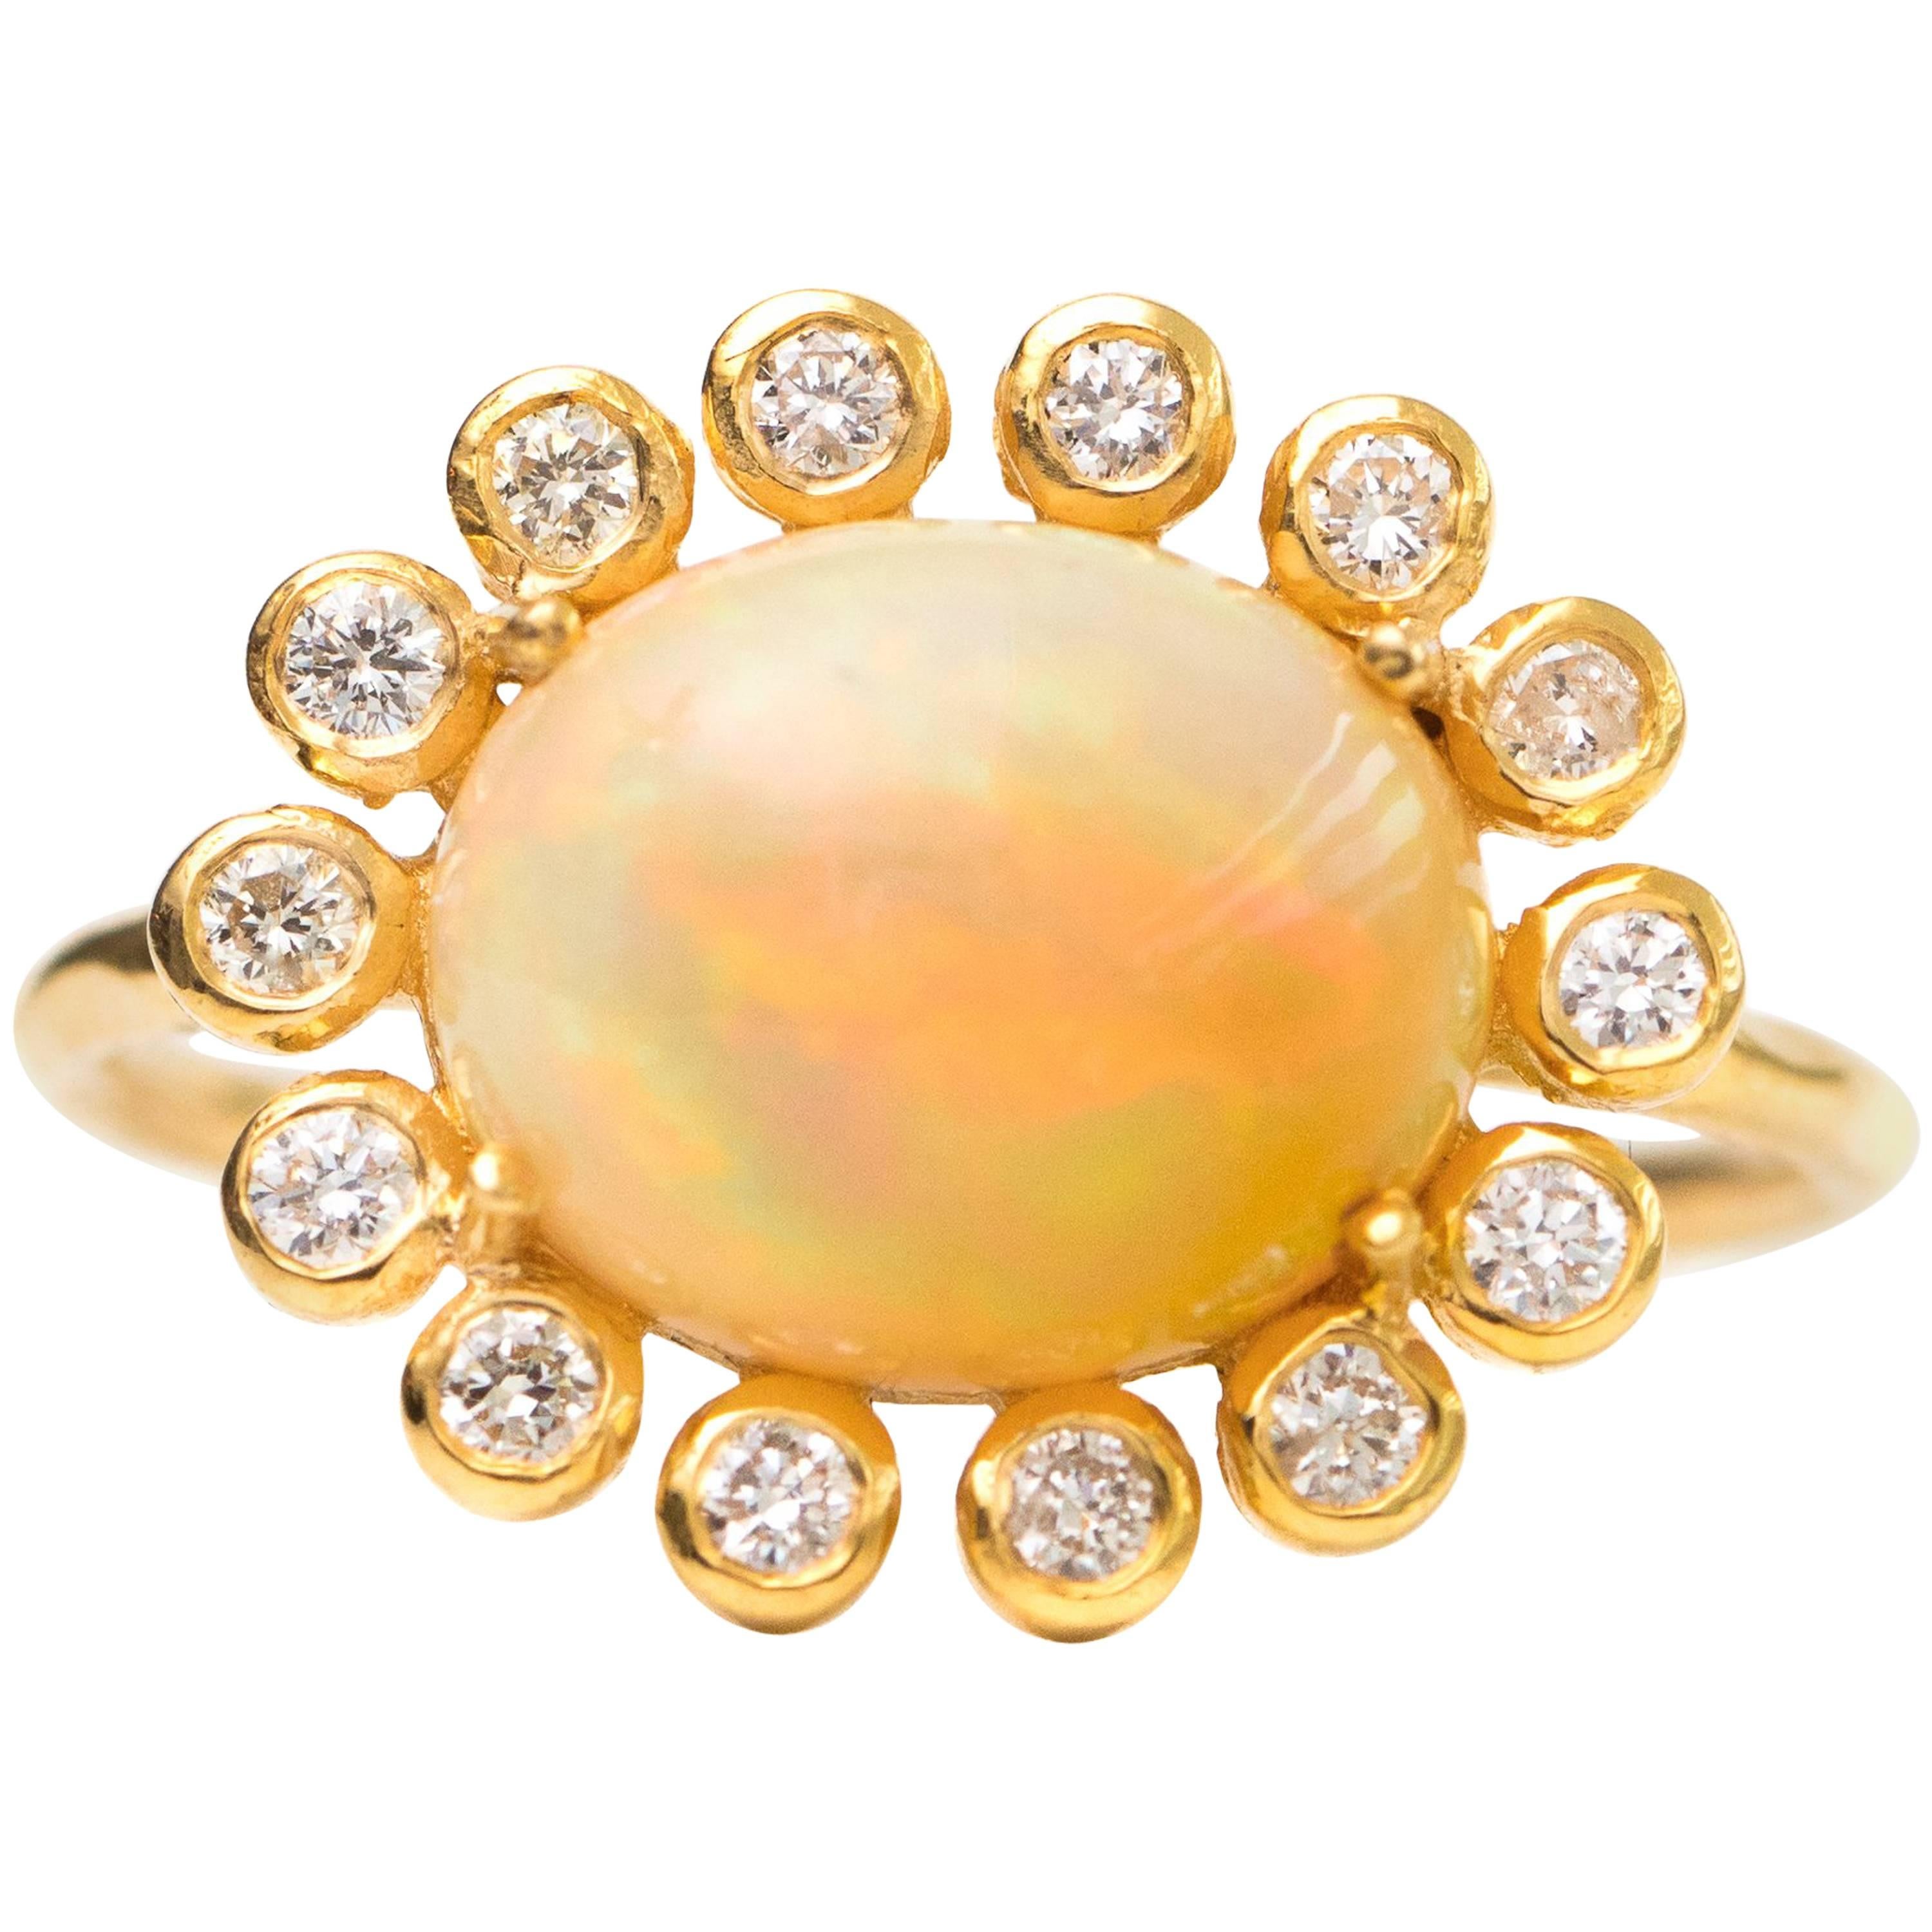 2.7 Carat Opal with Diamond Halo, 18 Karat Yellow Gold Ring